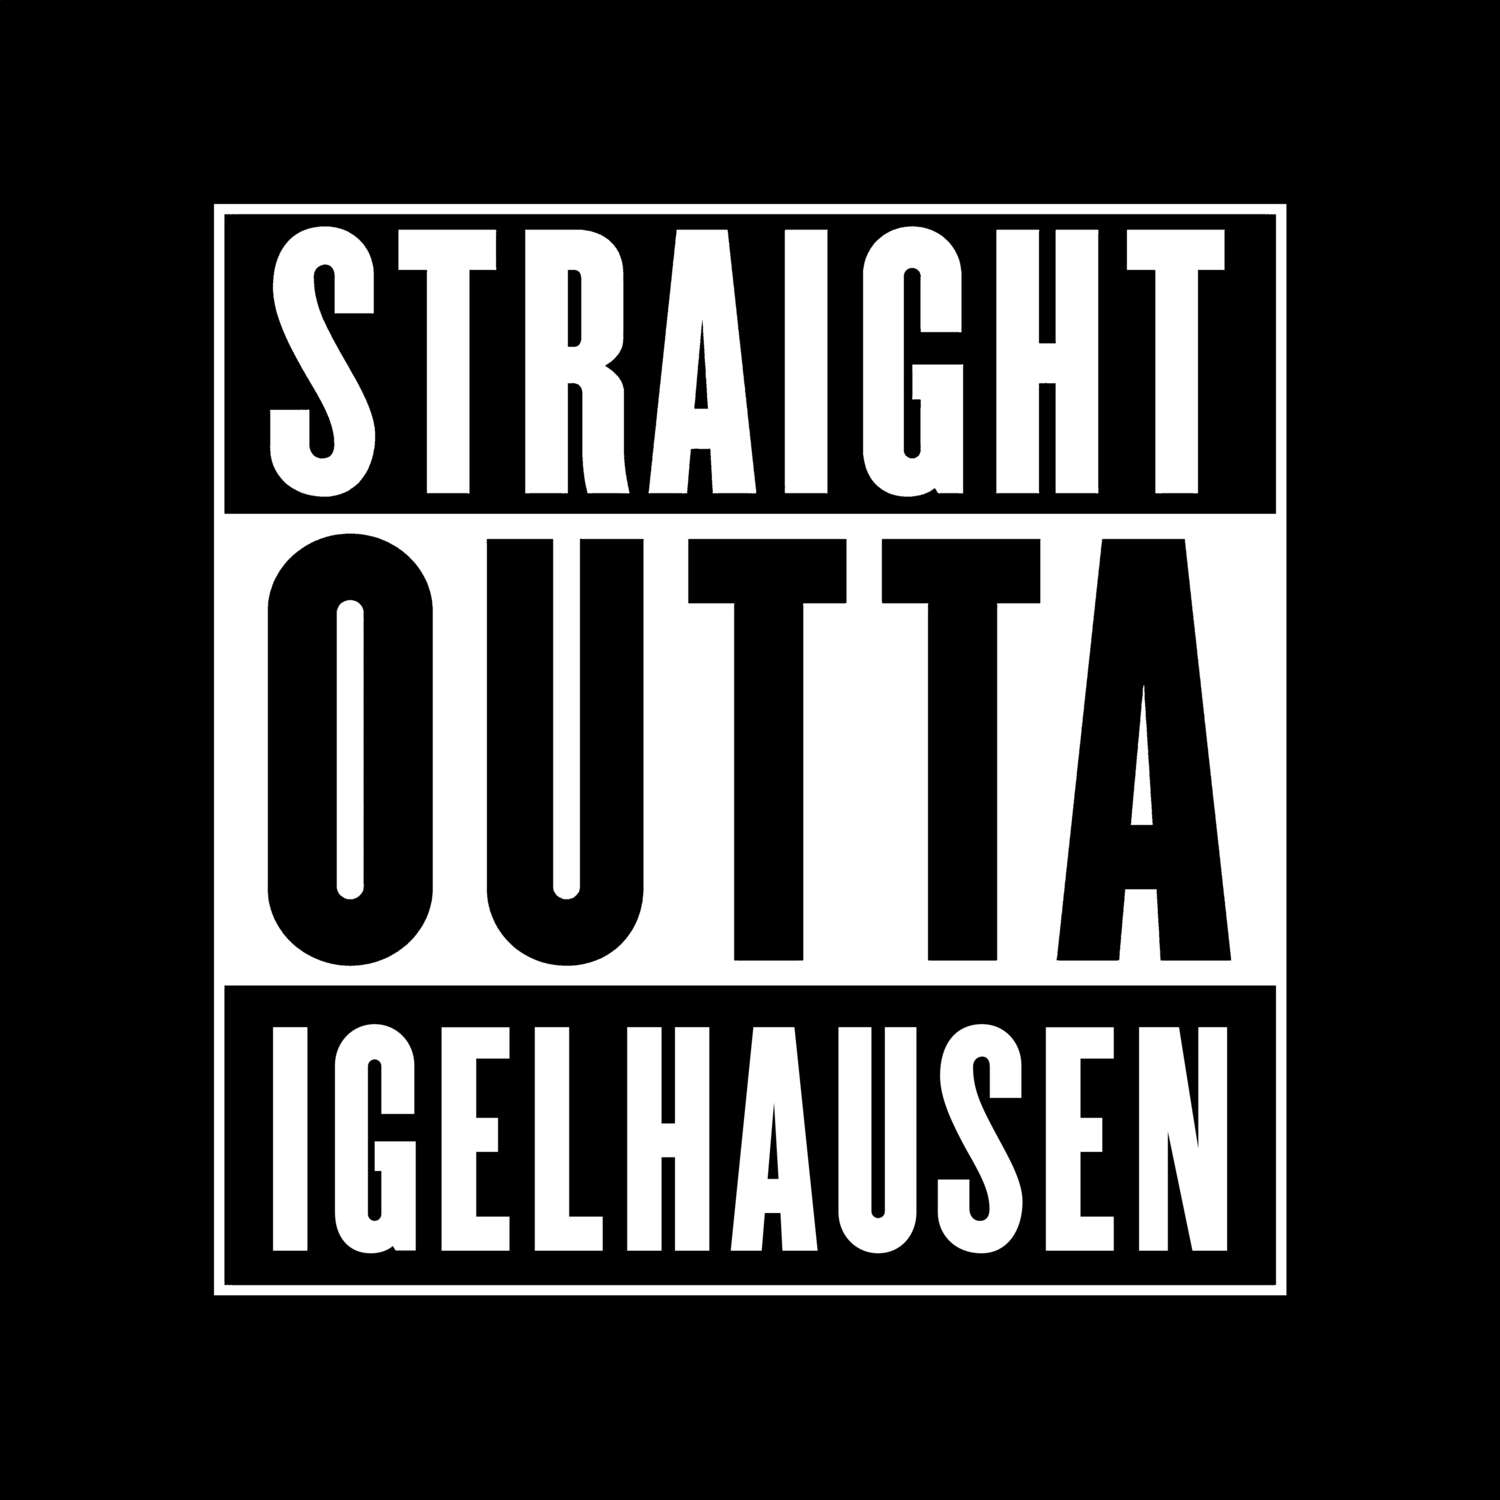 Igelhausen T-Shirt »Straight Outta«